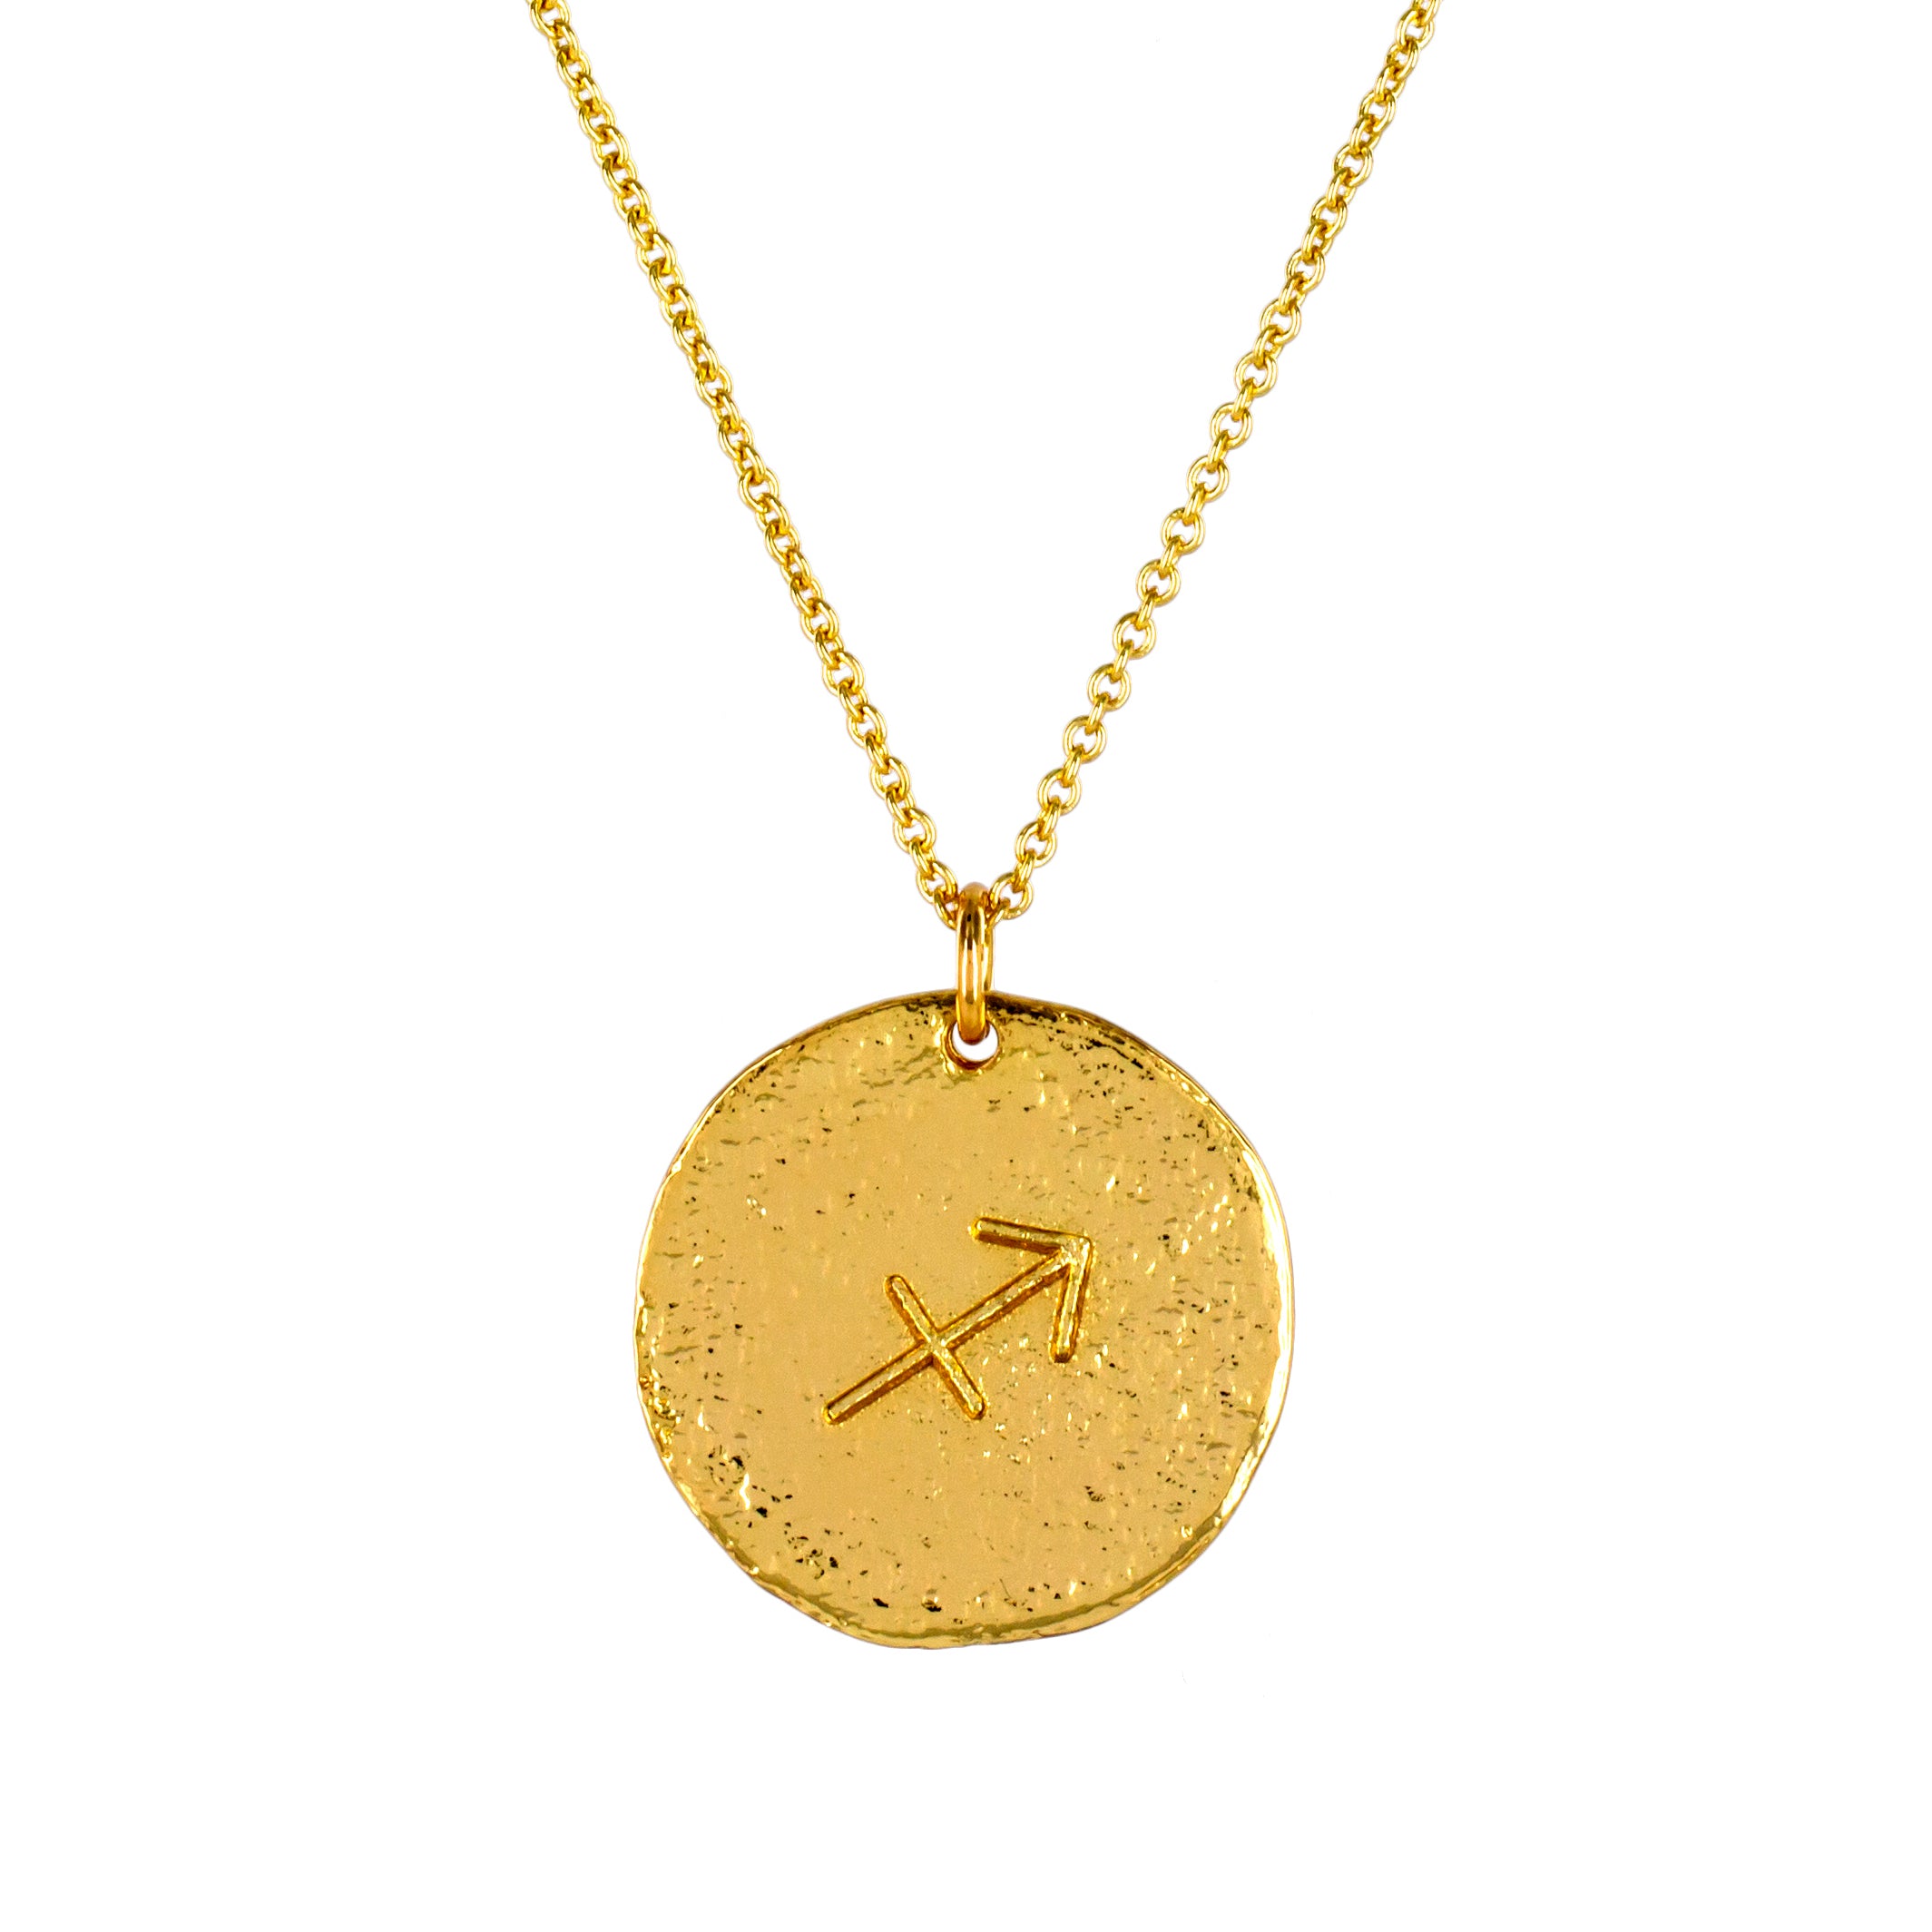 astrologie collier sagittaire- astrodisiac - bijoux - paris - claire naa - jewels - necklace sagittarius- astrology